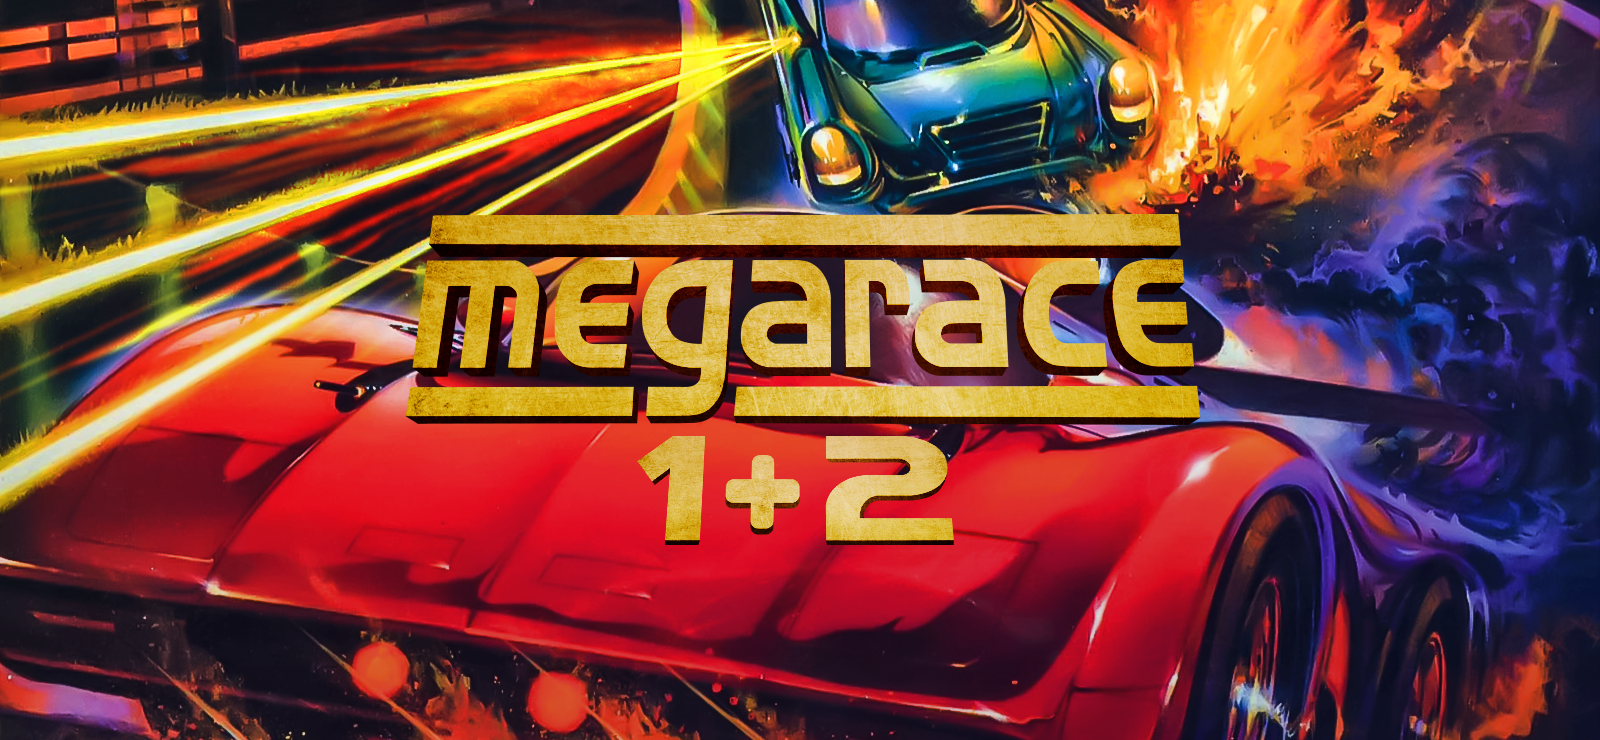 MegaRace 1+2